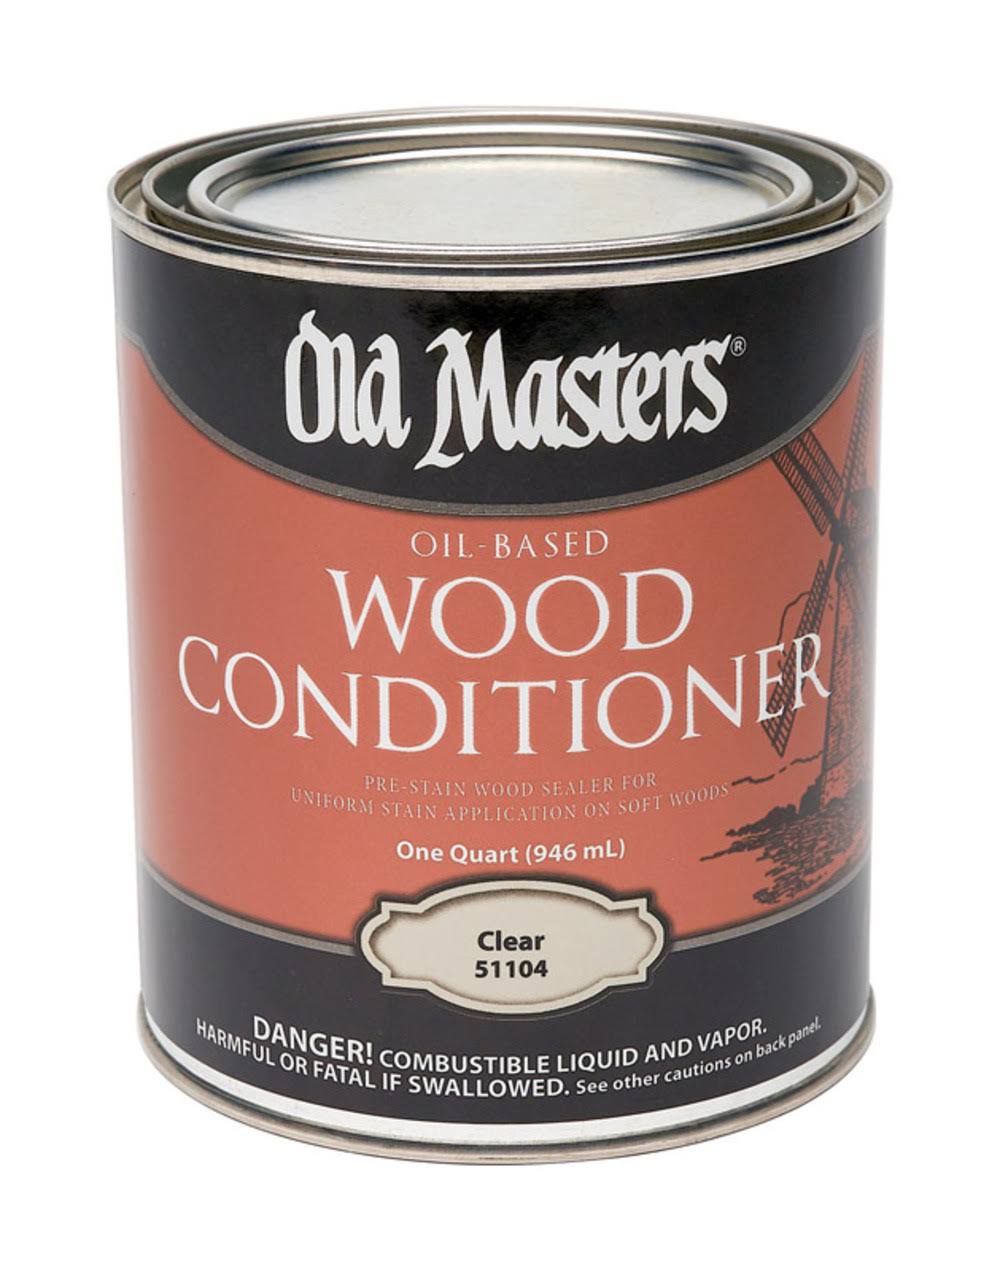 Old Masters Wood Conditioner Clear Liquid 1 qt 51104